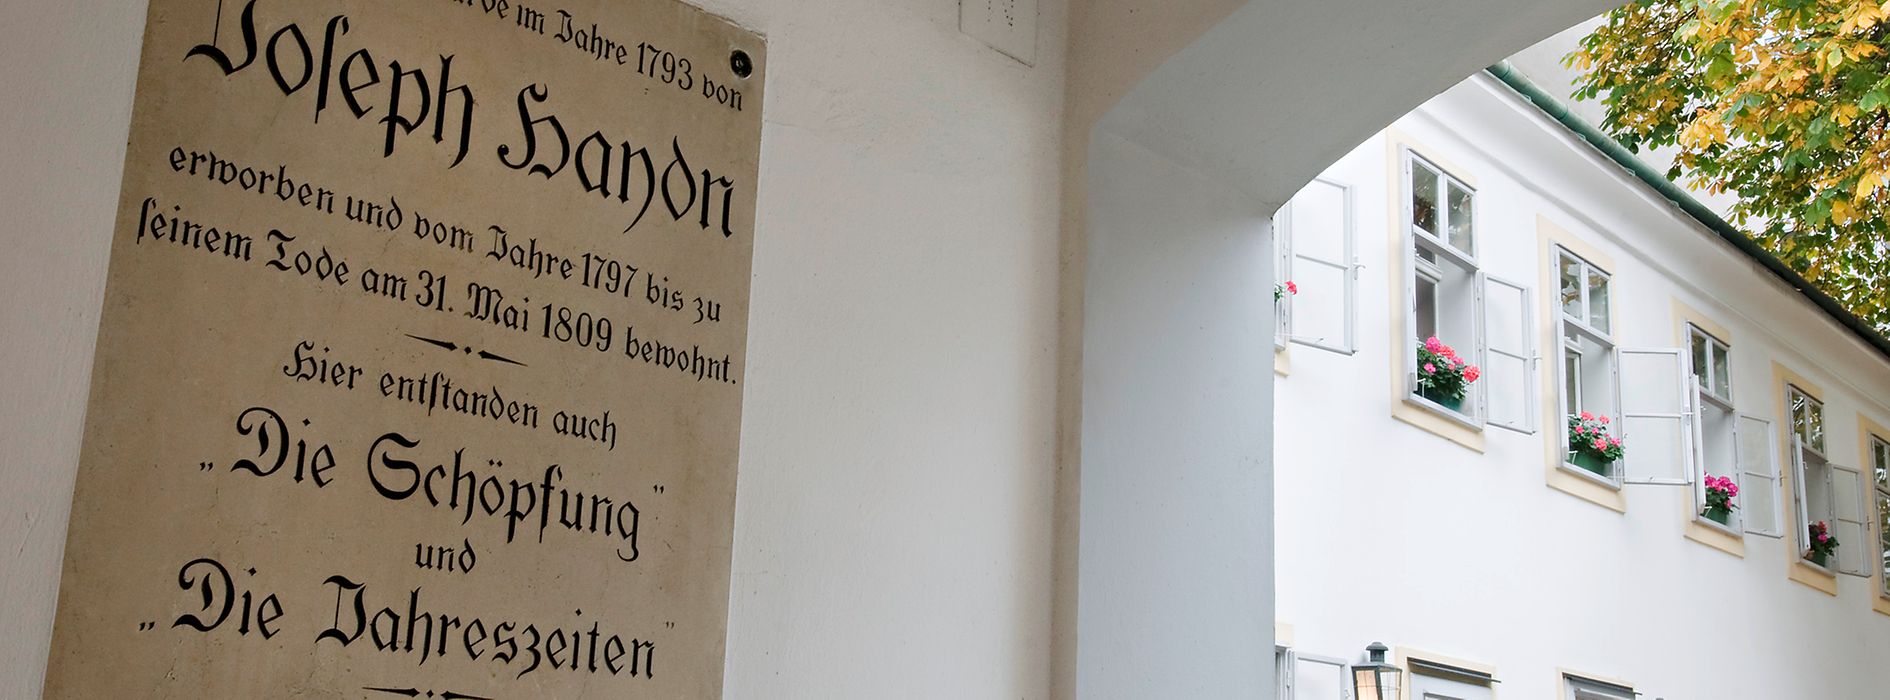 Haydn House, commemorative plaque